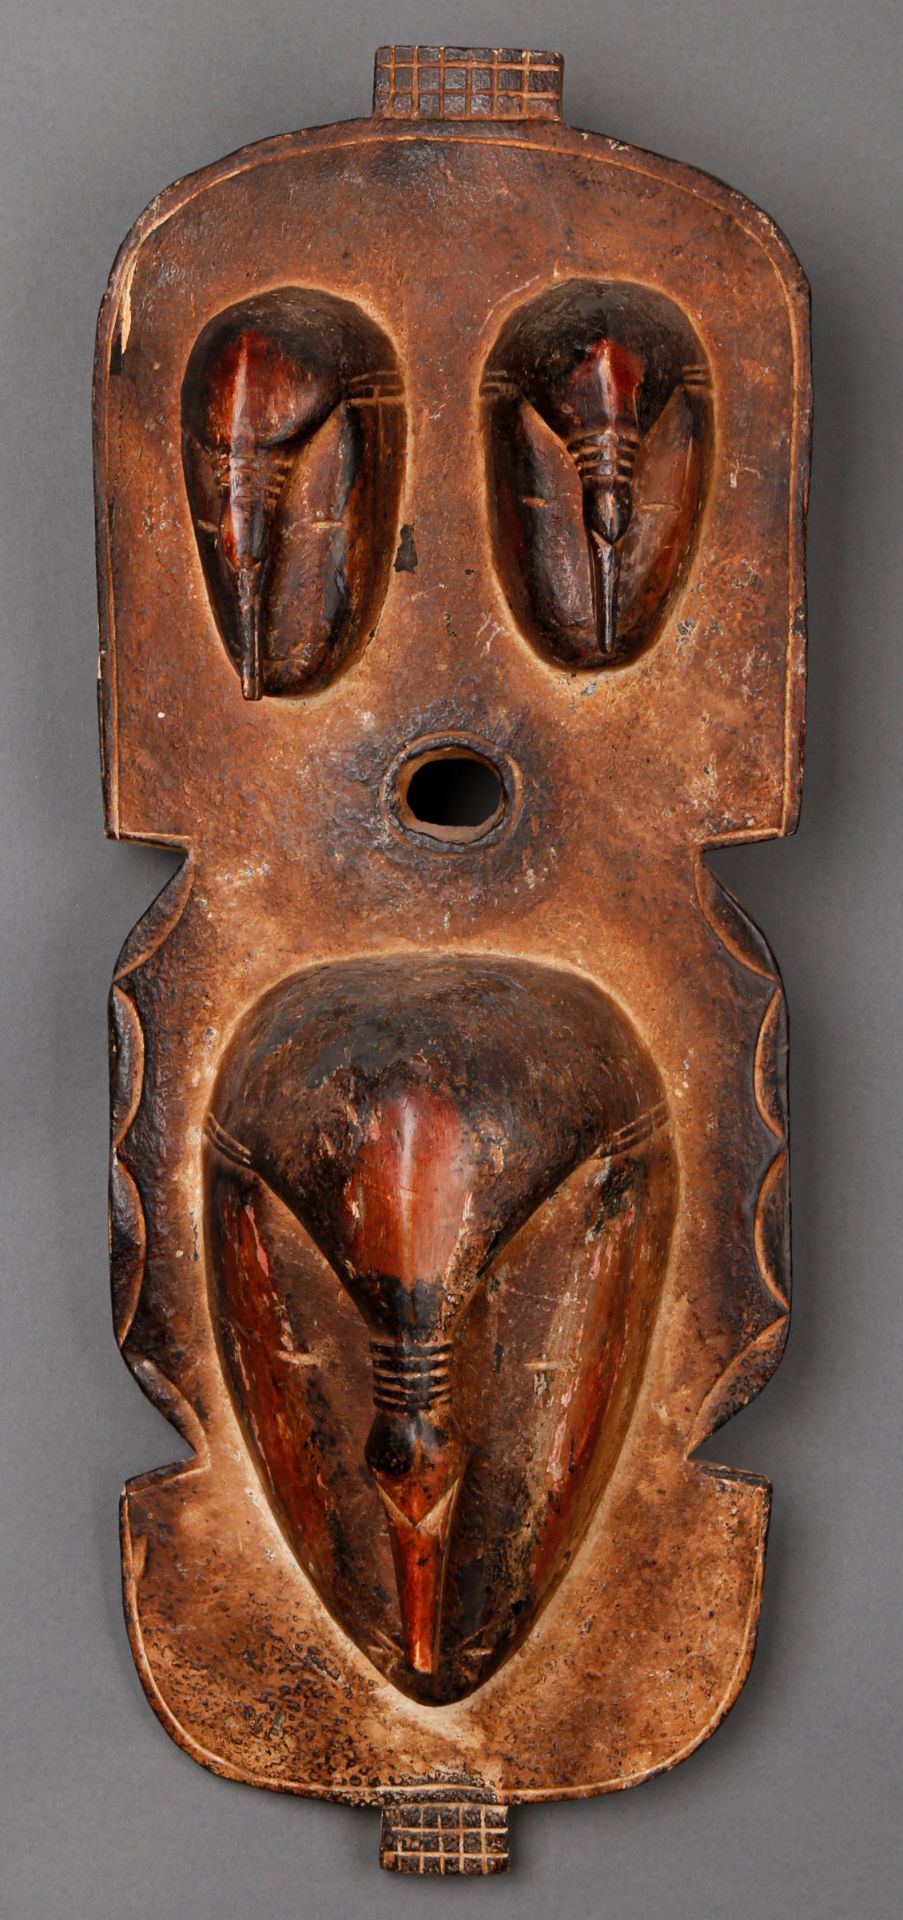 Maske mit drei Entenkörpern, Songhai (Mali), Ende 19./Anfang 20. Jh.